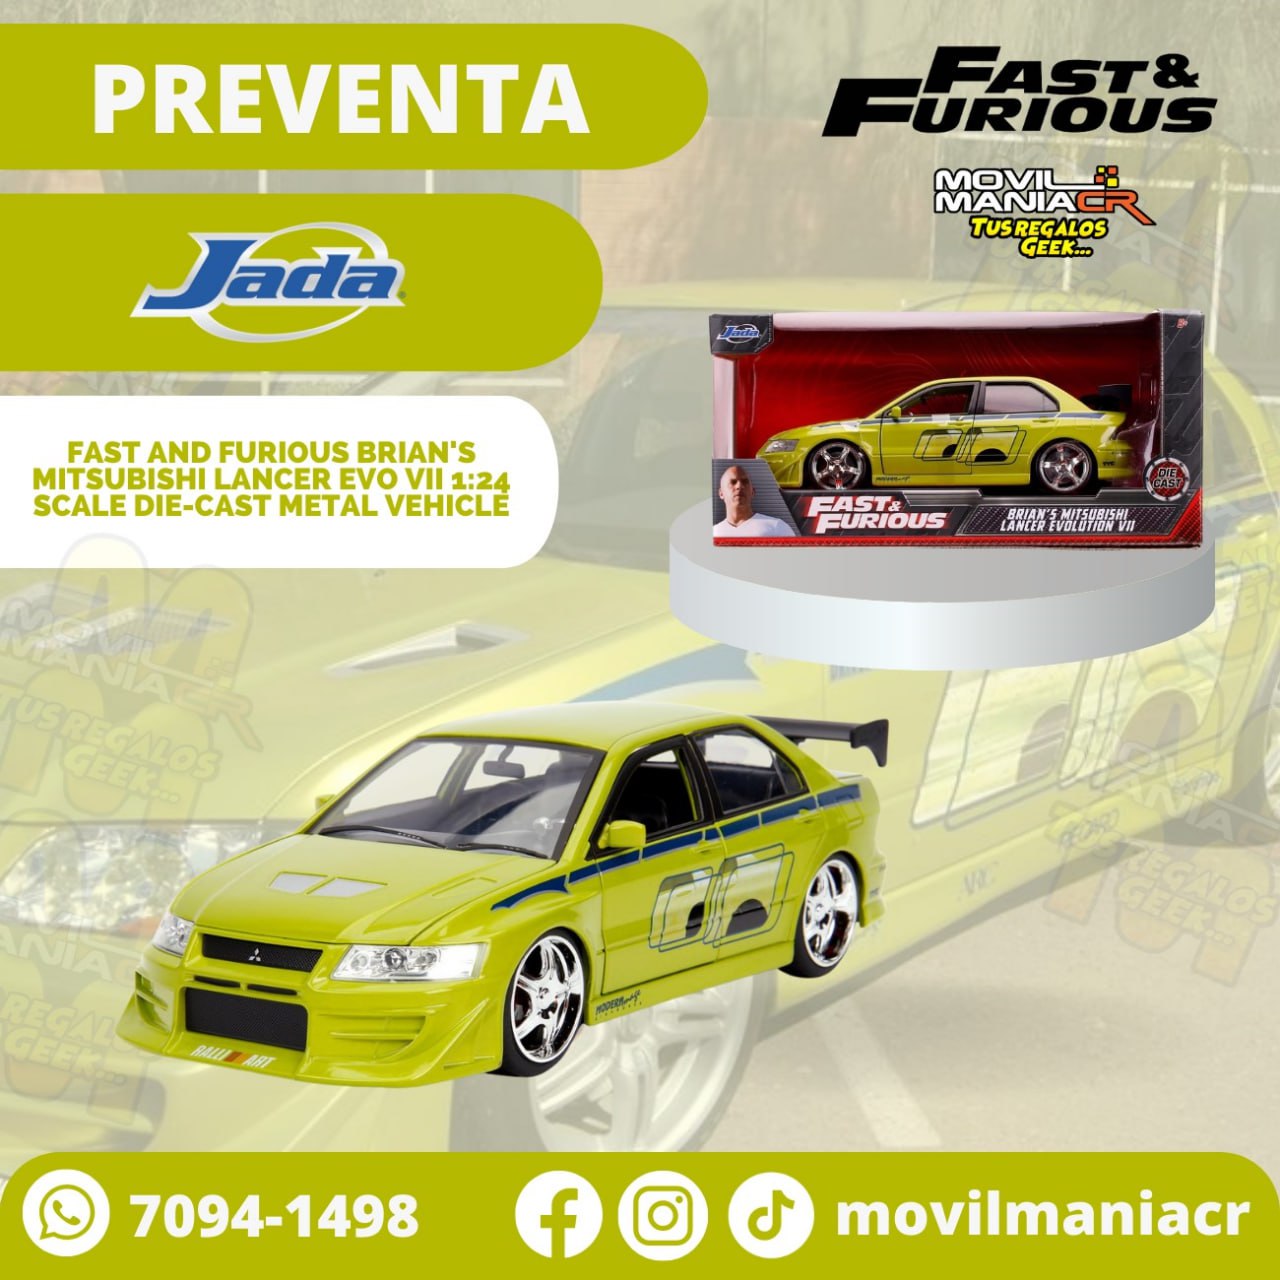 Preventa Carro Jada Toys Fast and Furious Brian's Mitsubishi Lancer Evo VII Escala 124